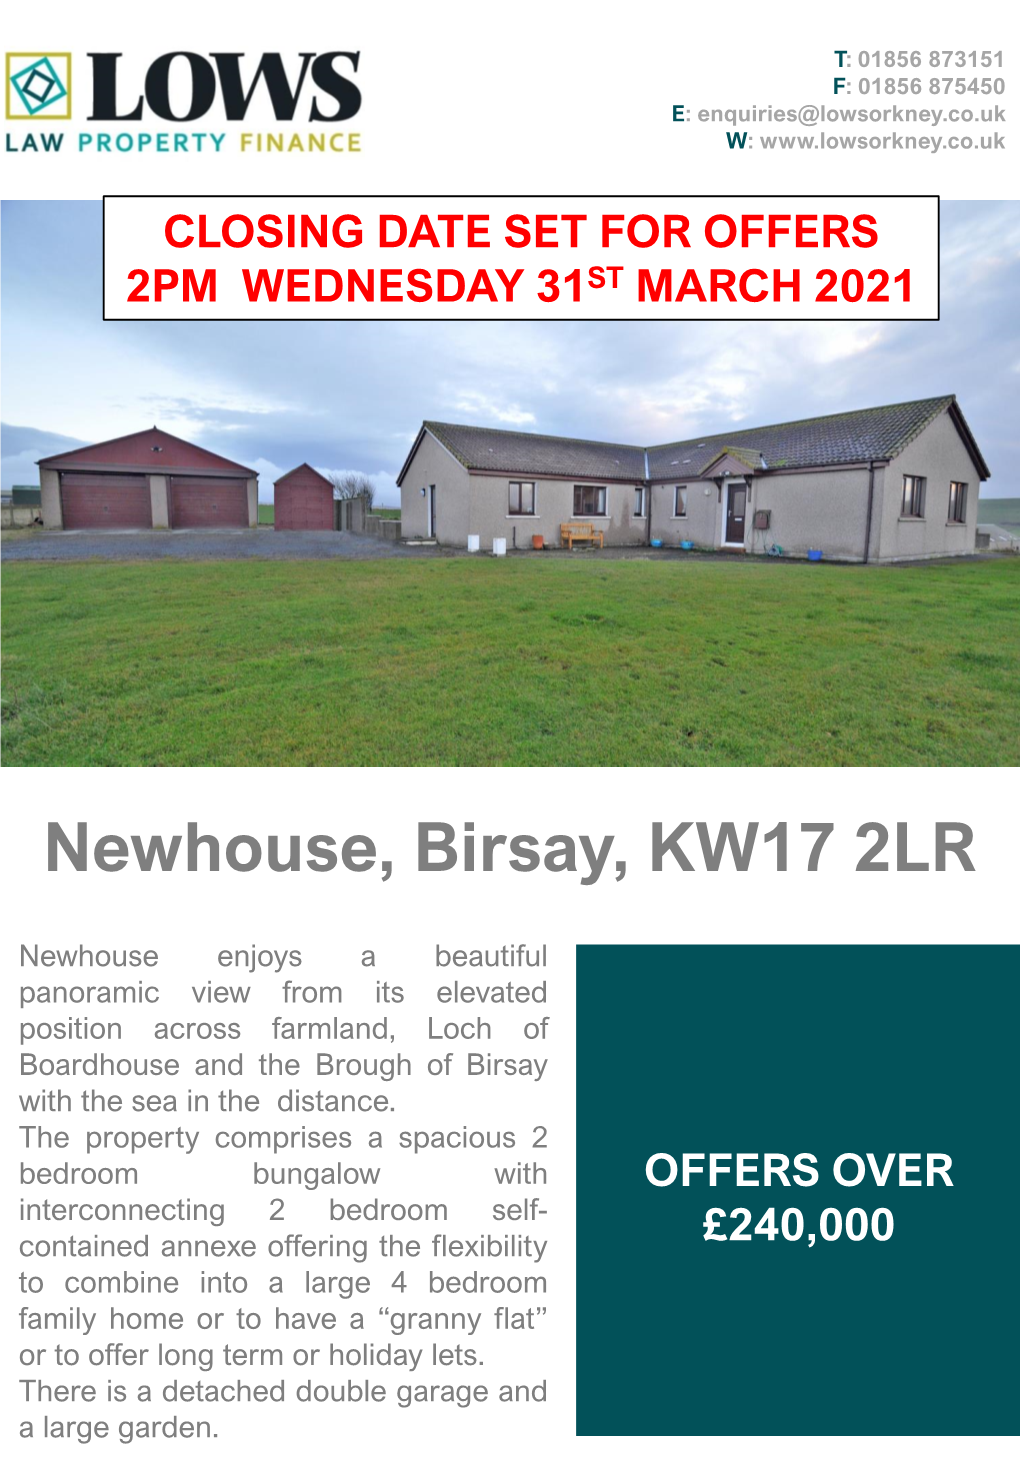 Newhouse, Birsay, KW17 2LR